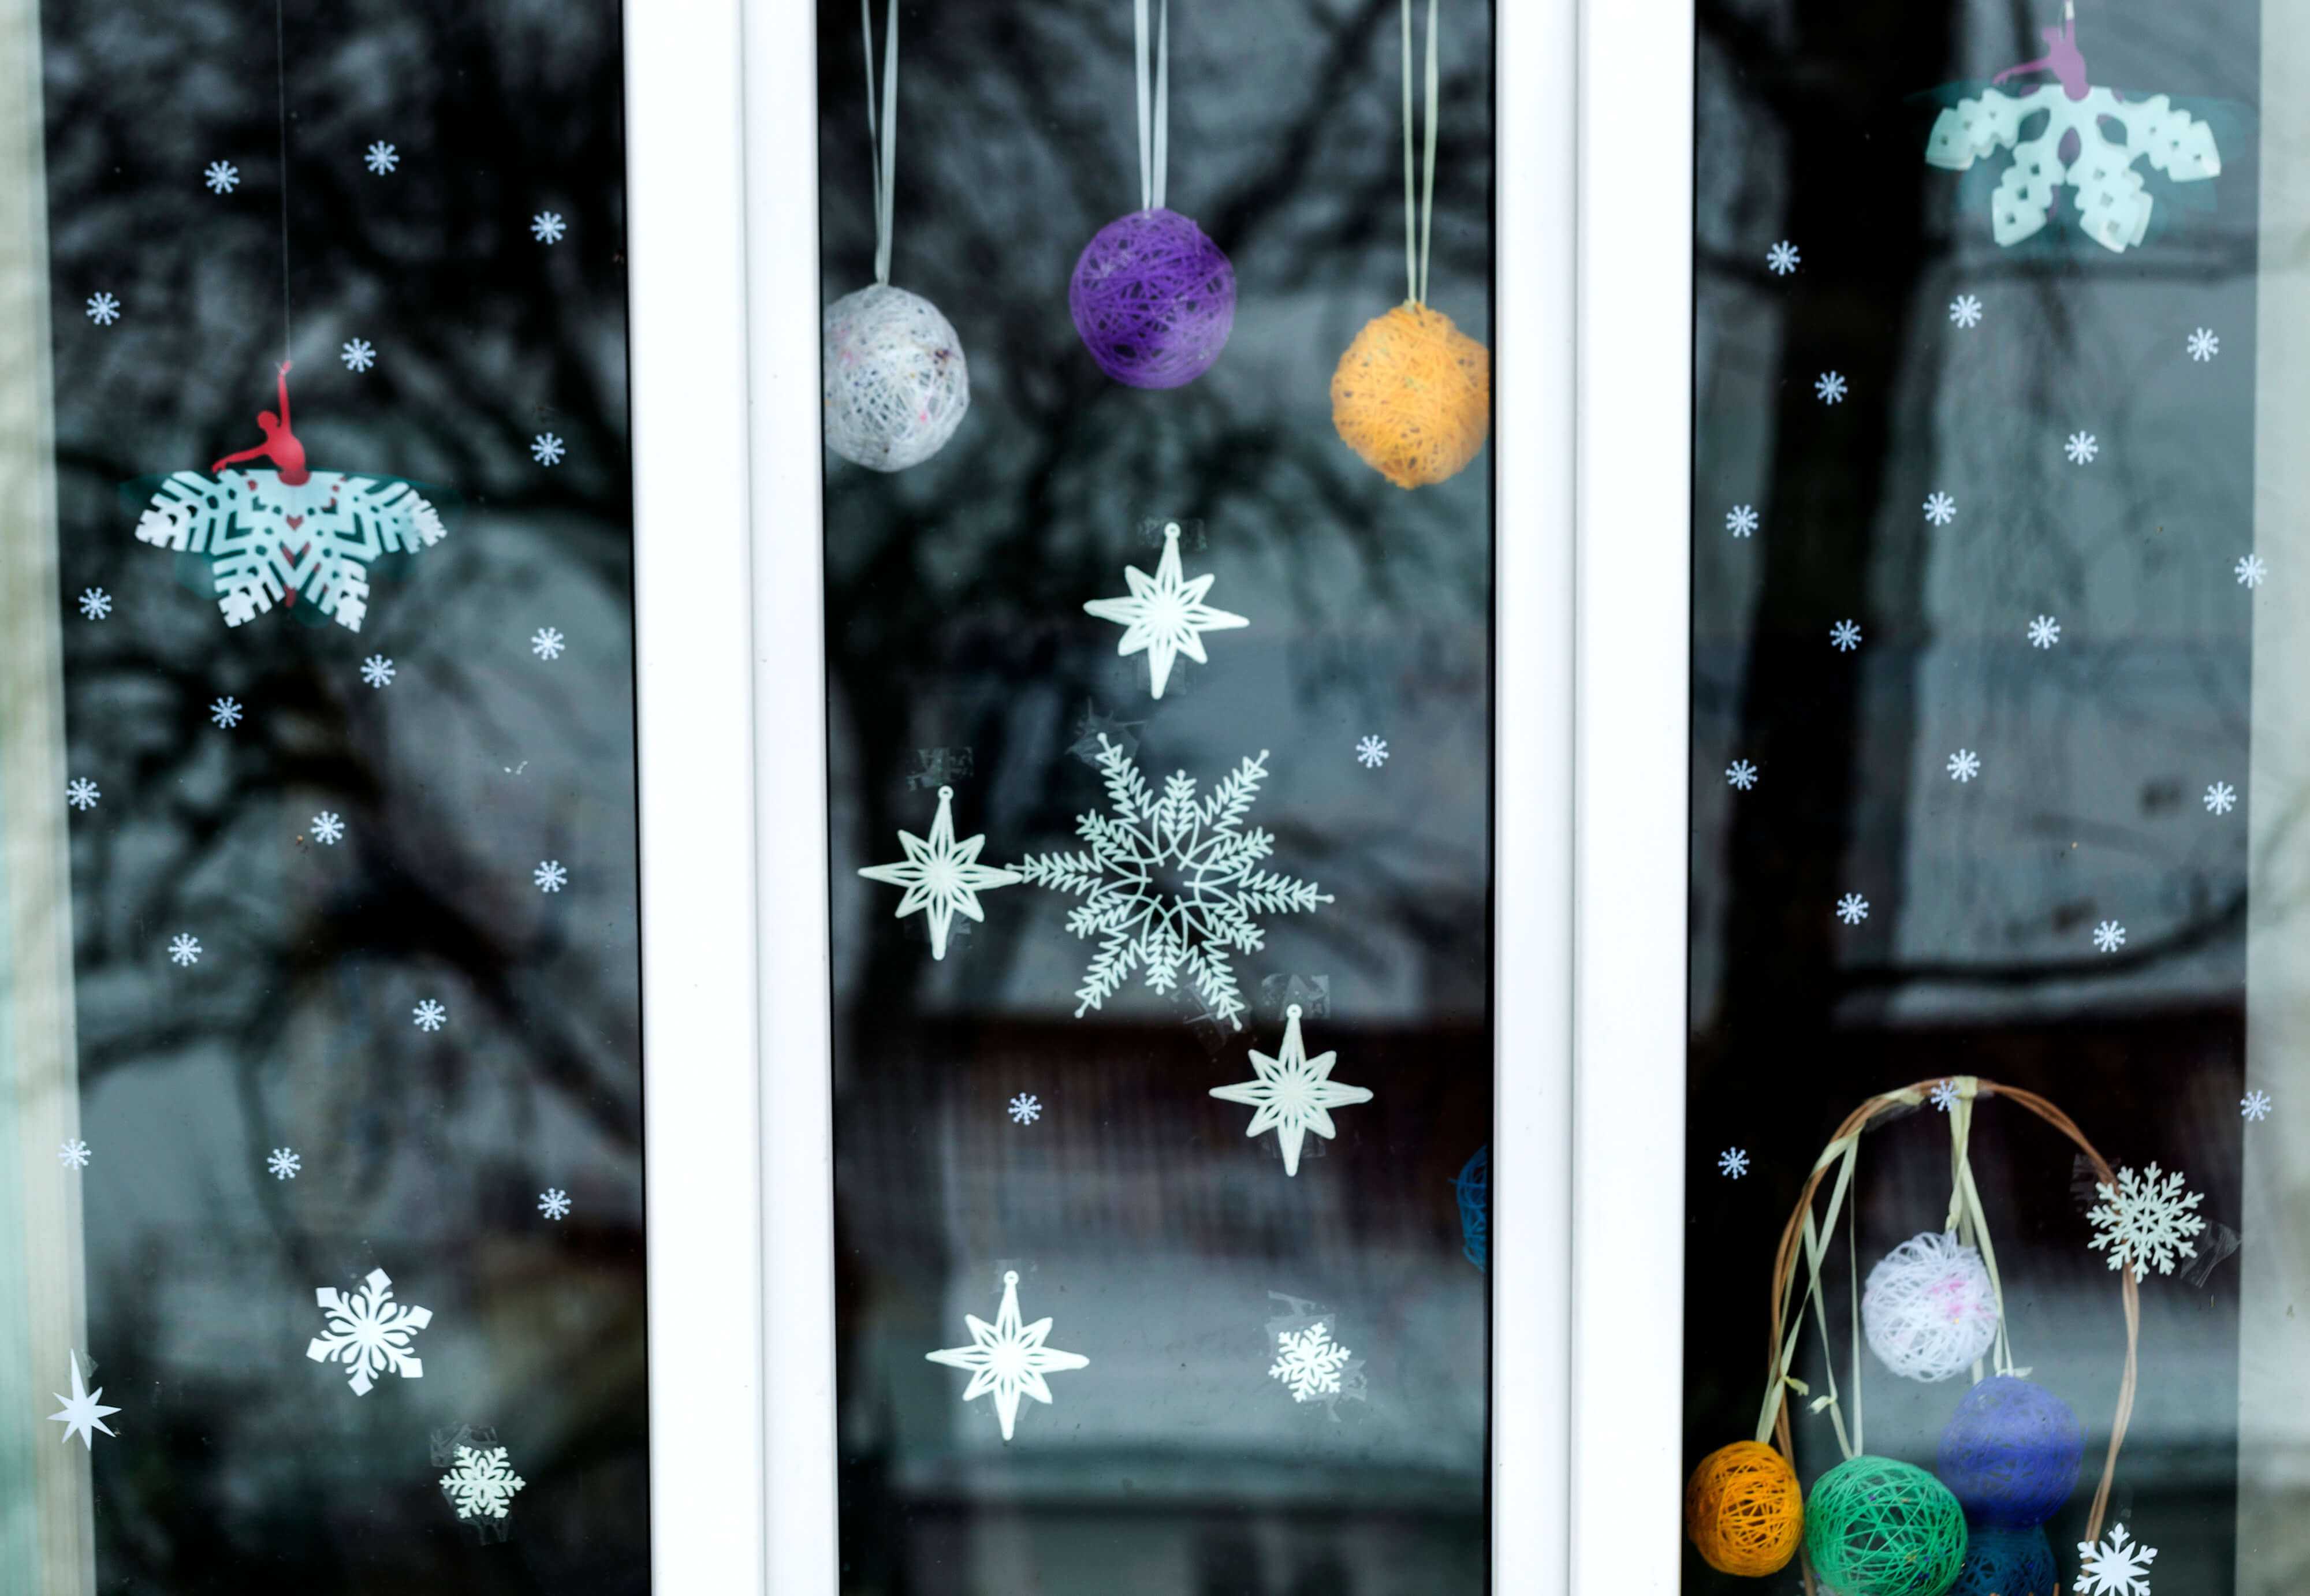 White kitchen garden window decorated with snowflakes 